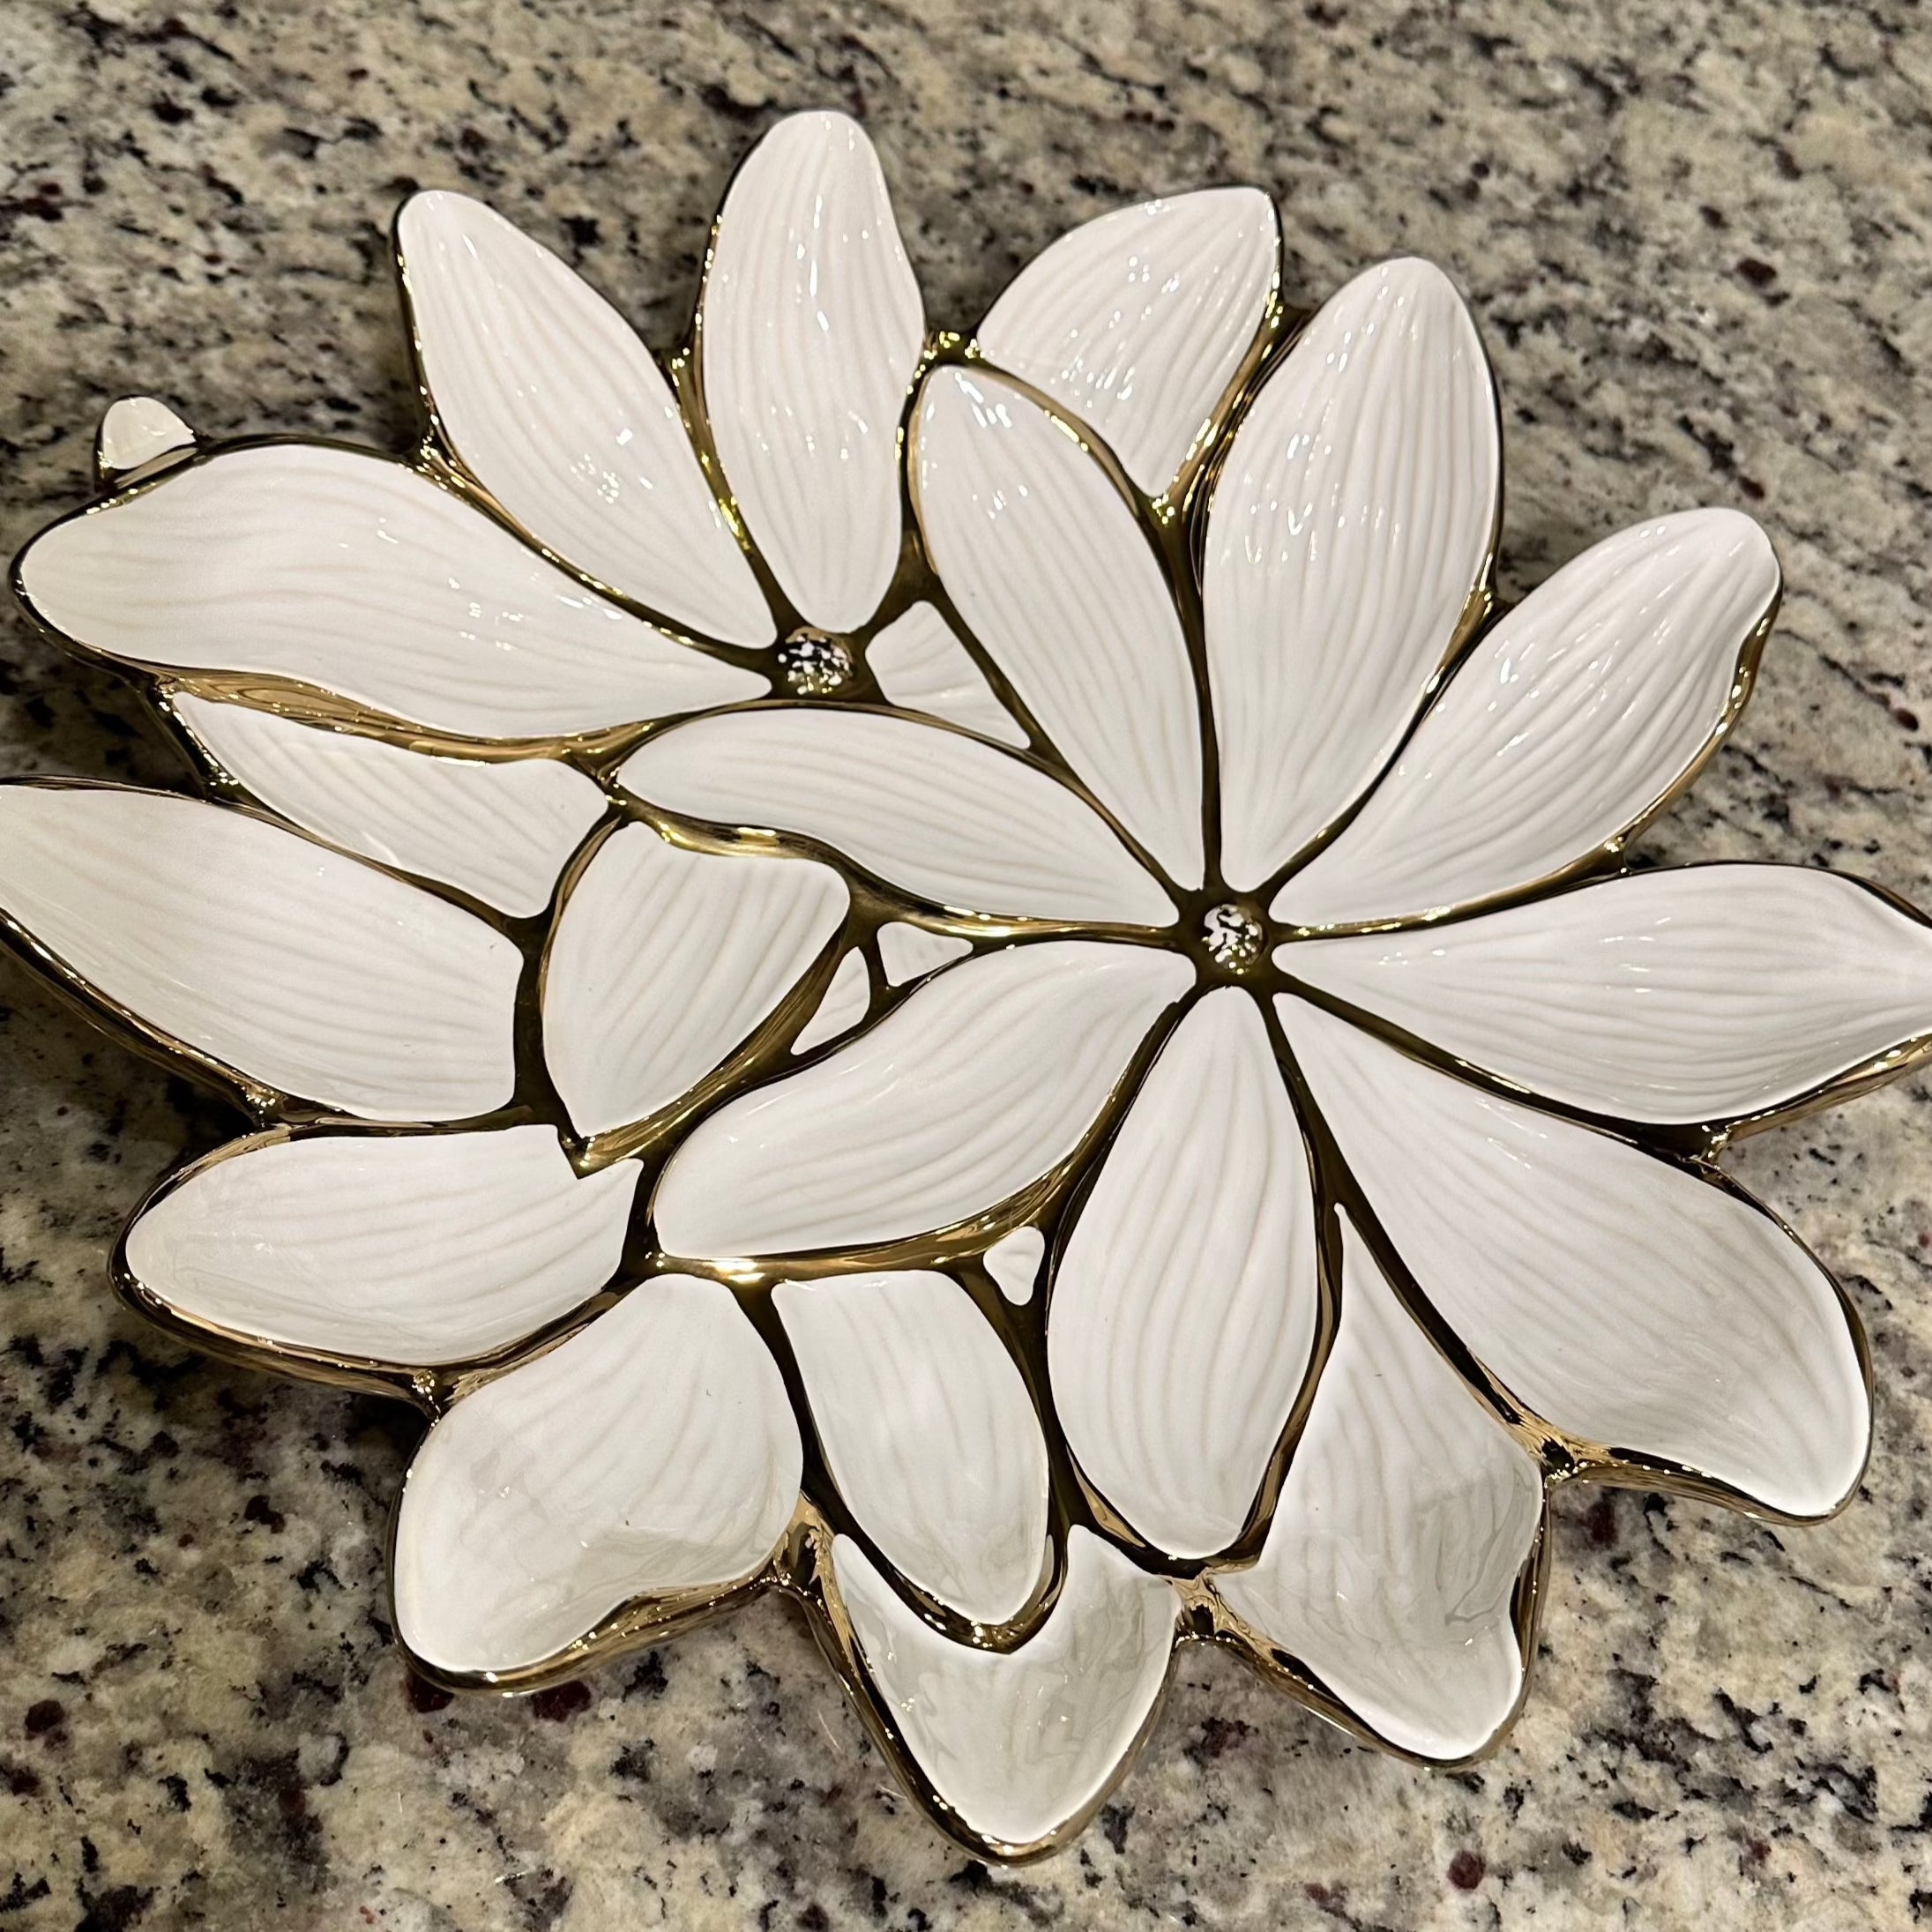 Plato de flores de porcelana blanca con borde dorado (11,75")